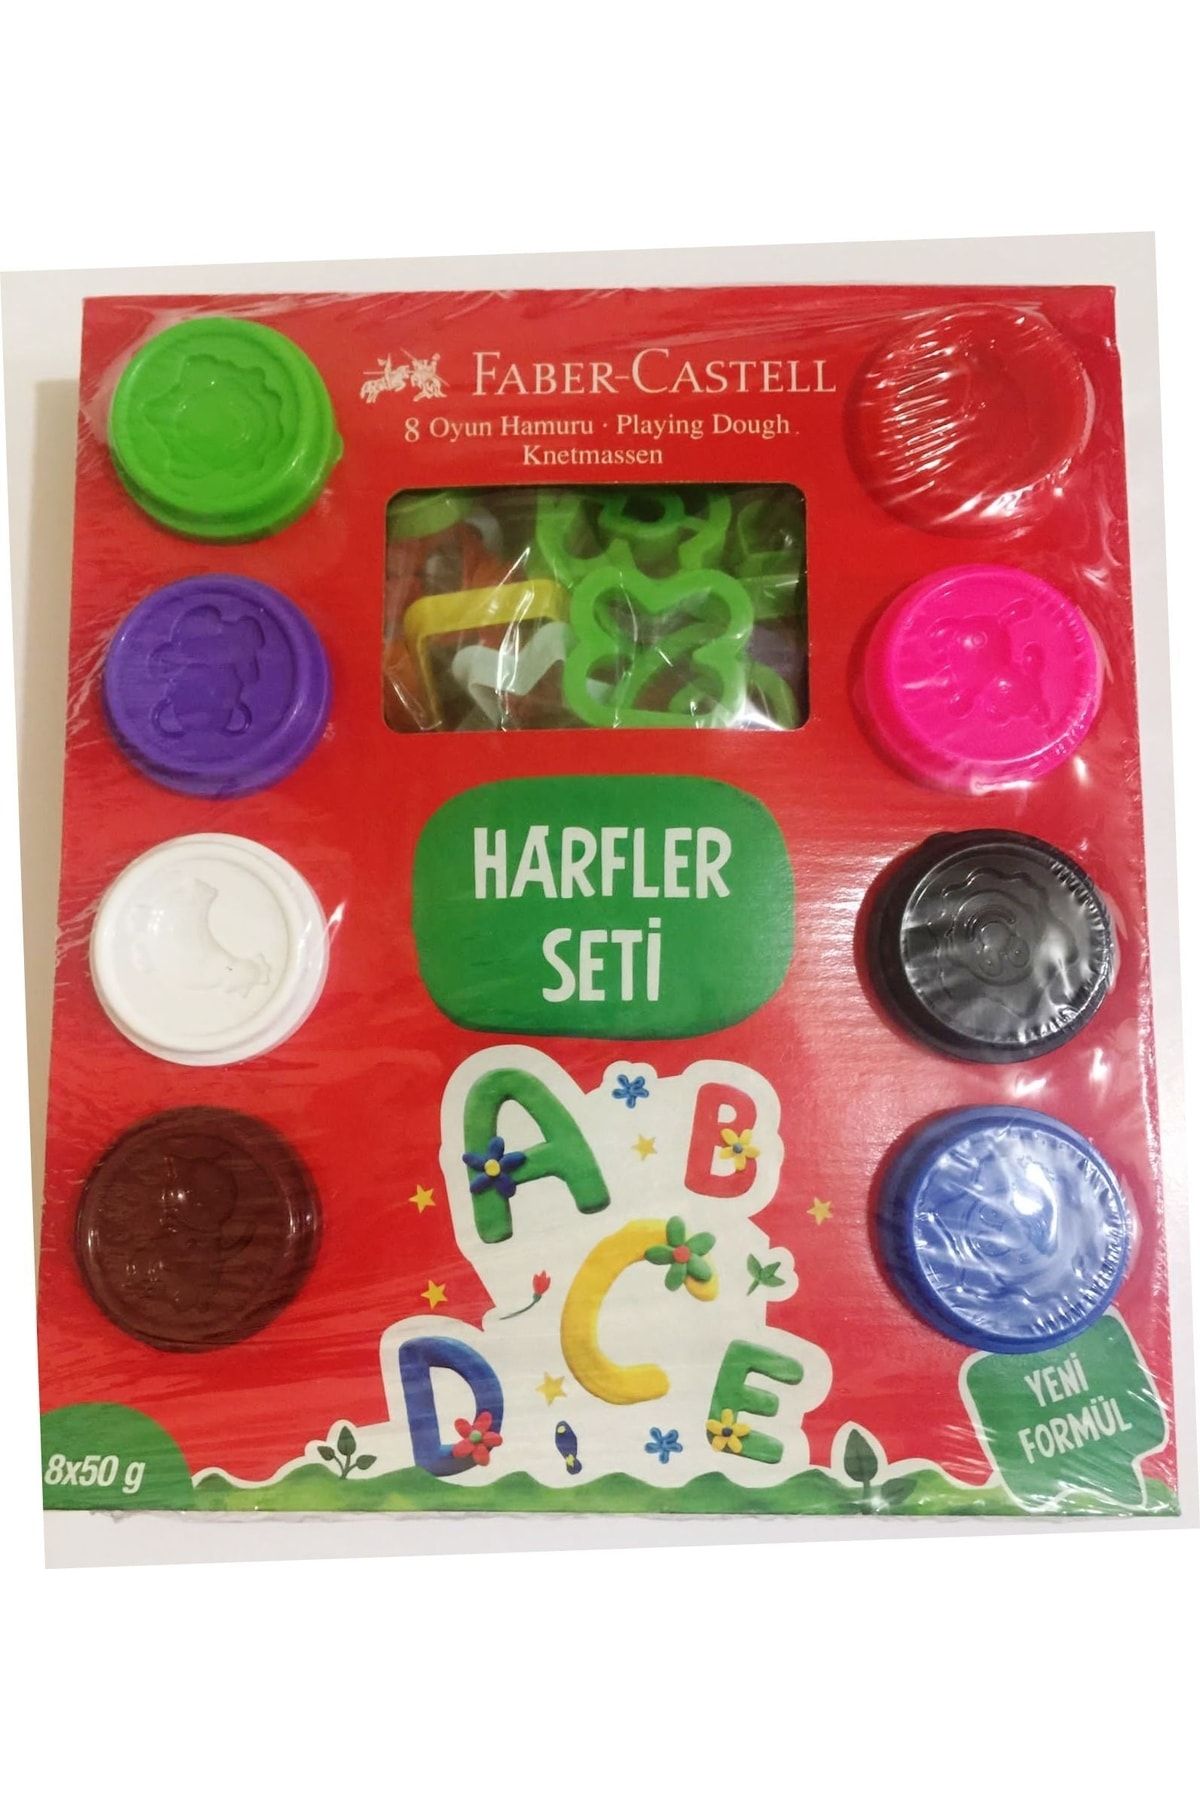 Faber Castell Harfler Seti Oyun Hamuru 8x50